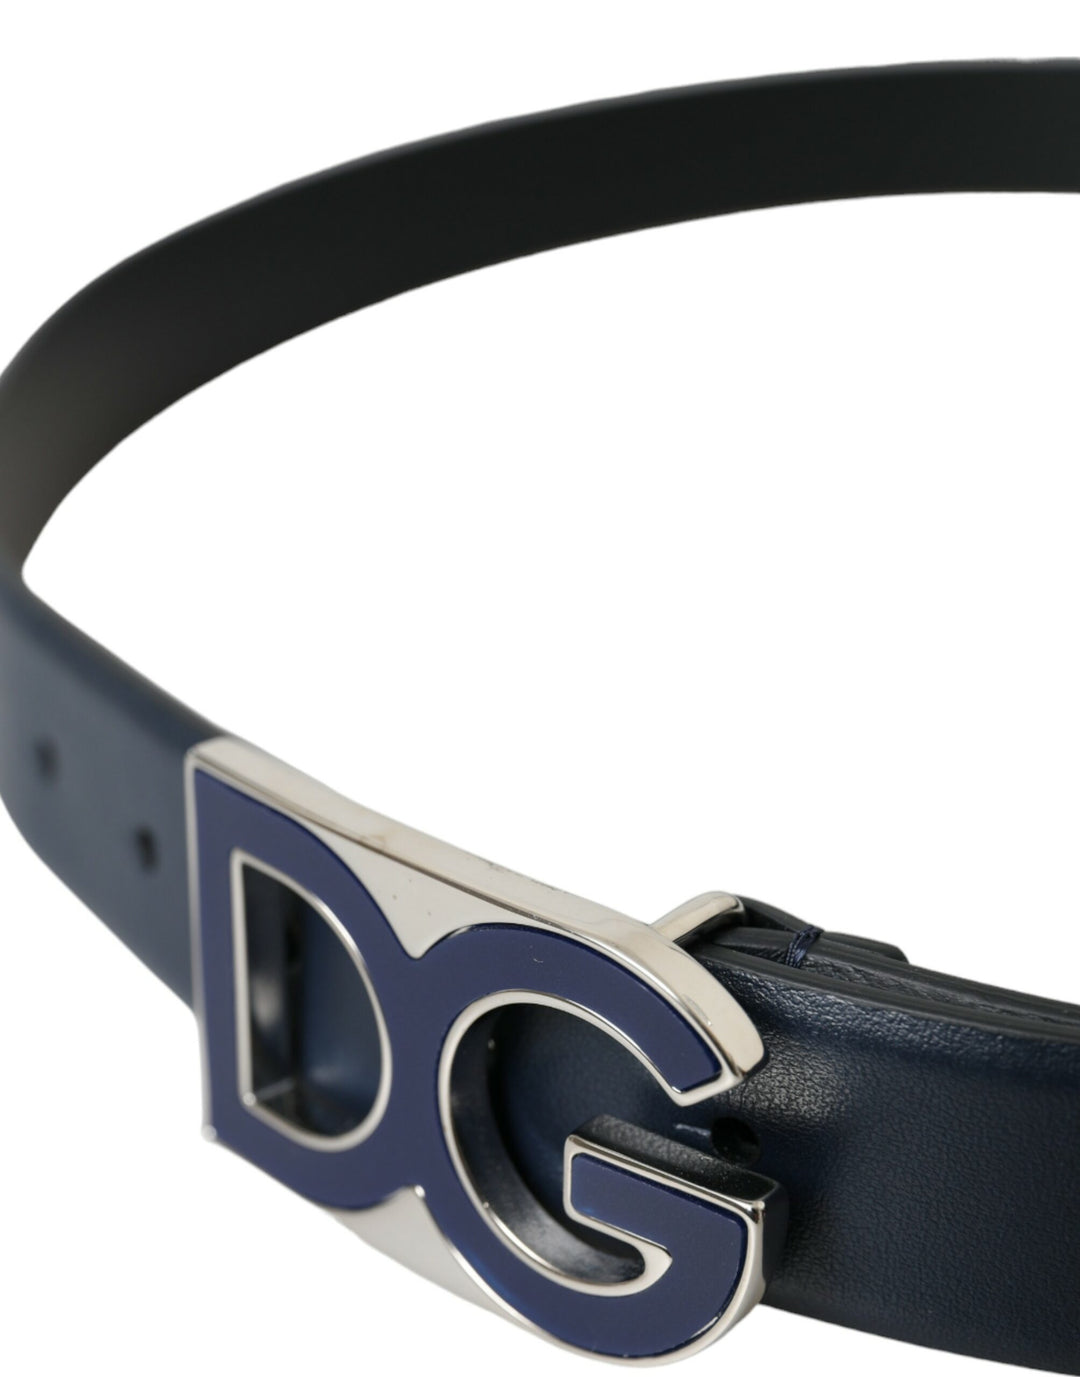 Dolce & Gabbana Blue Leather Metal Logo Buckle Belt Men